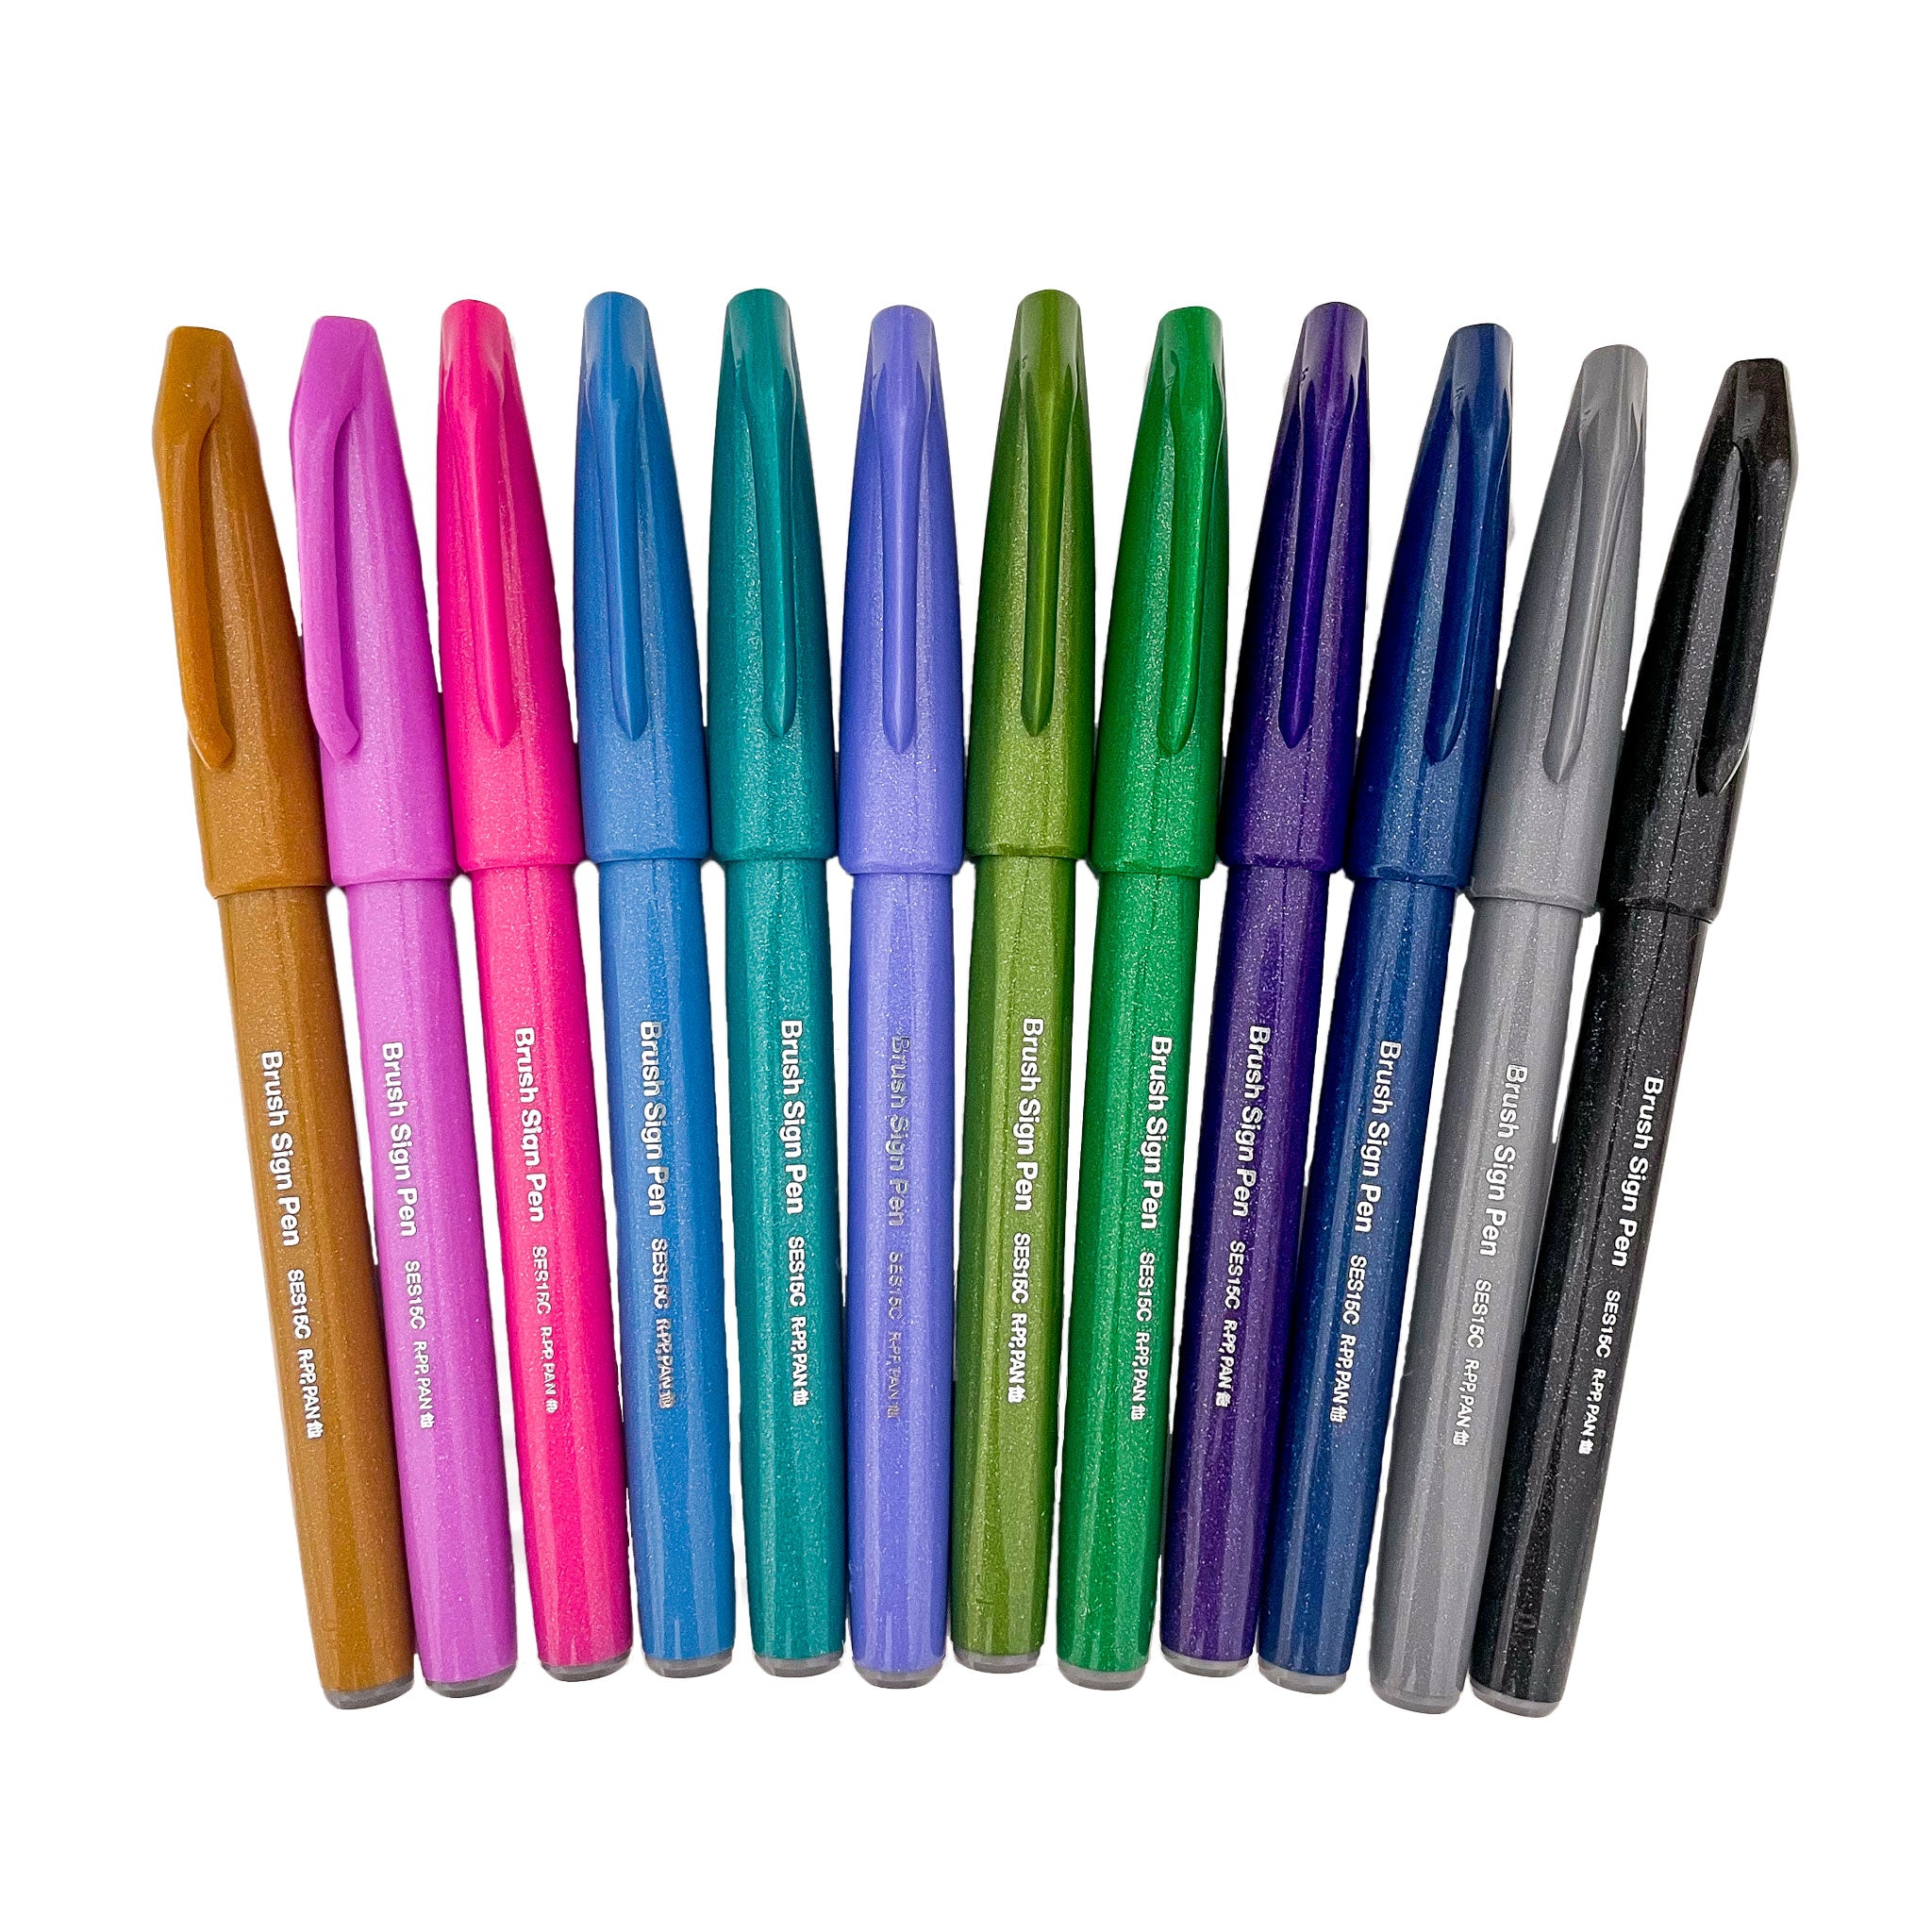 PENTEL Brush Pen Brush Touch Sign Pen NEW 6 Colors Set